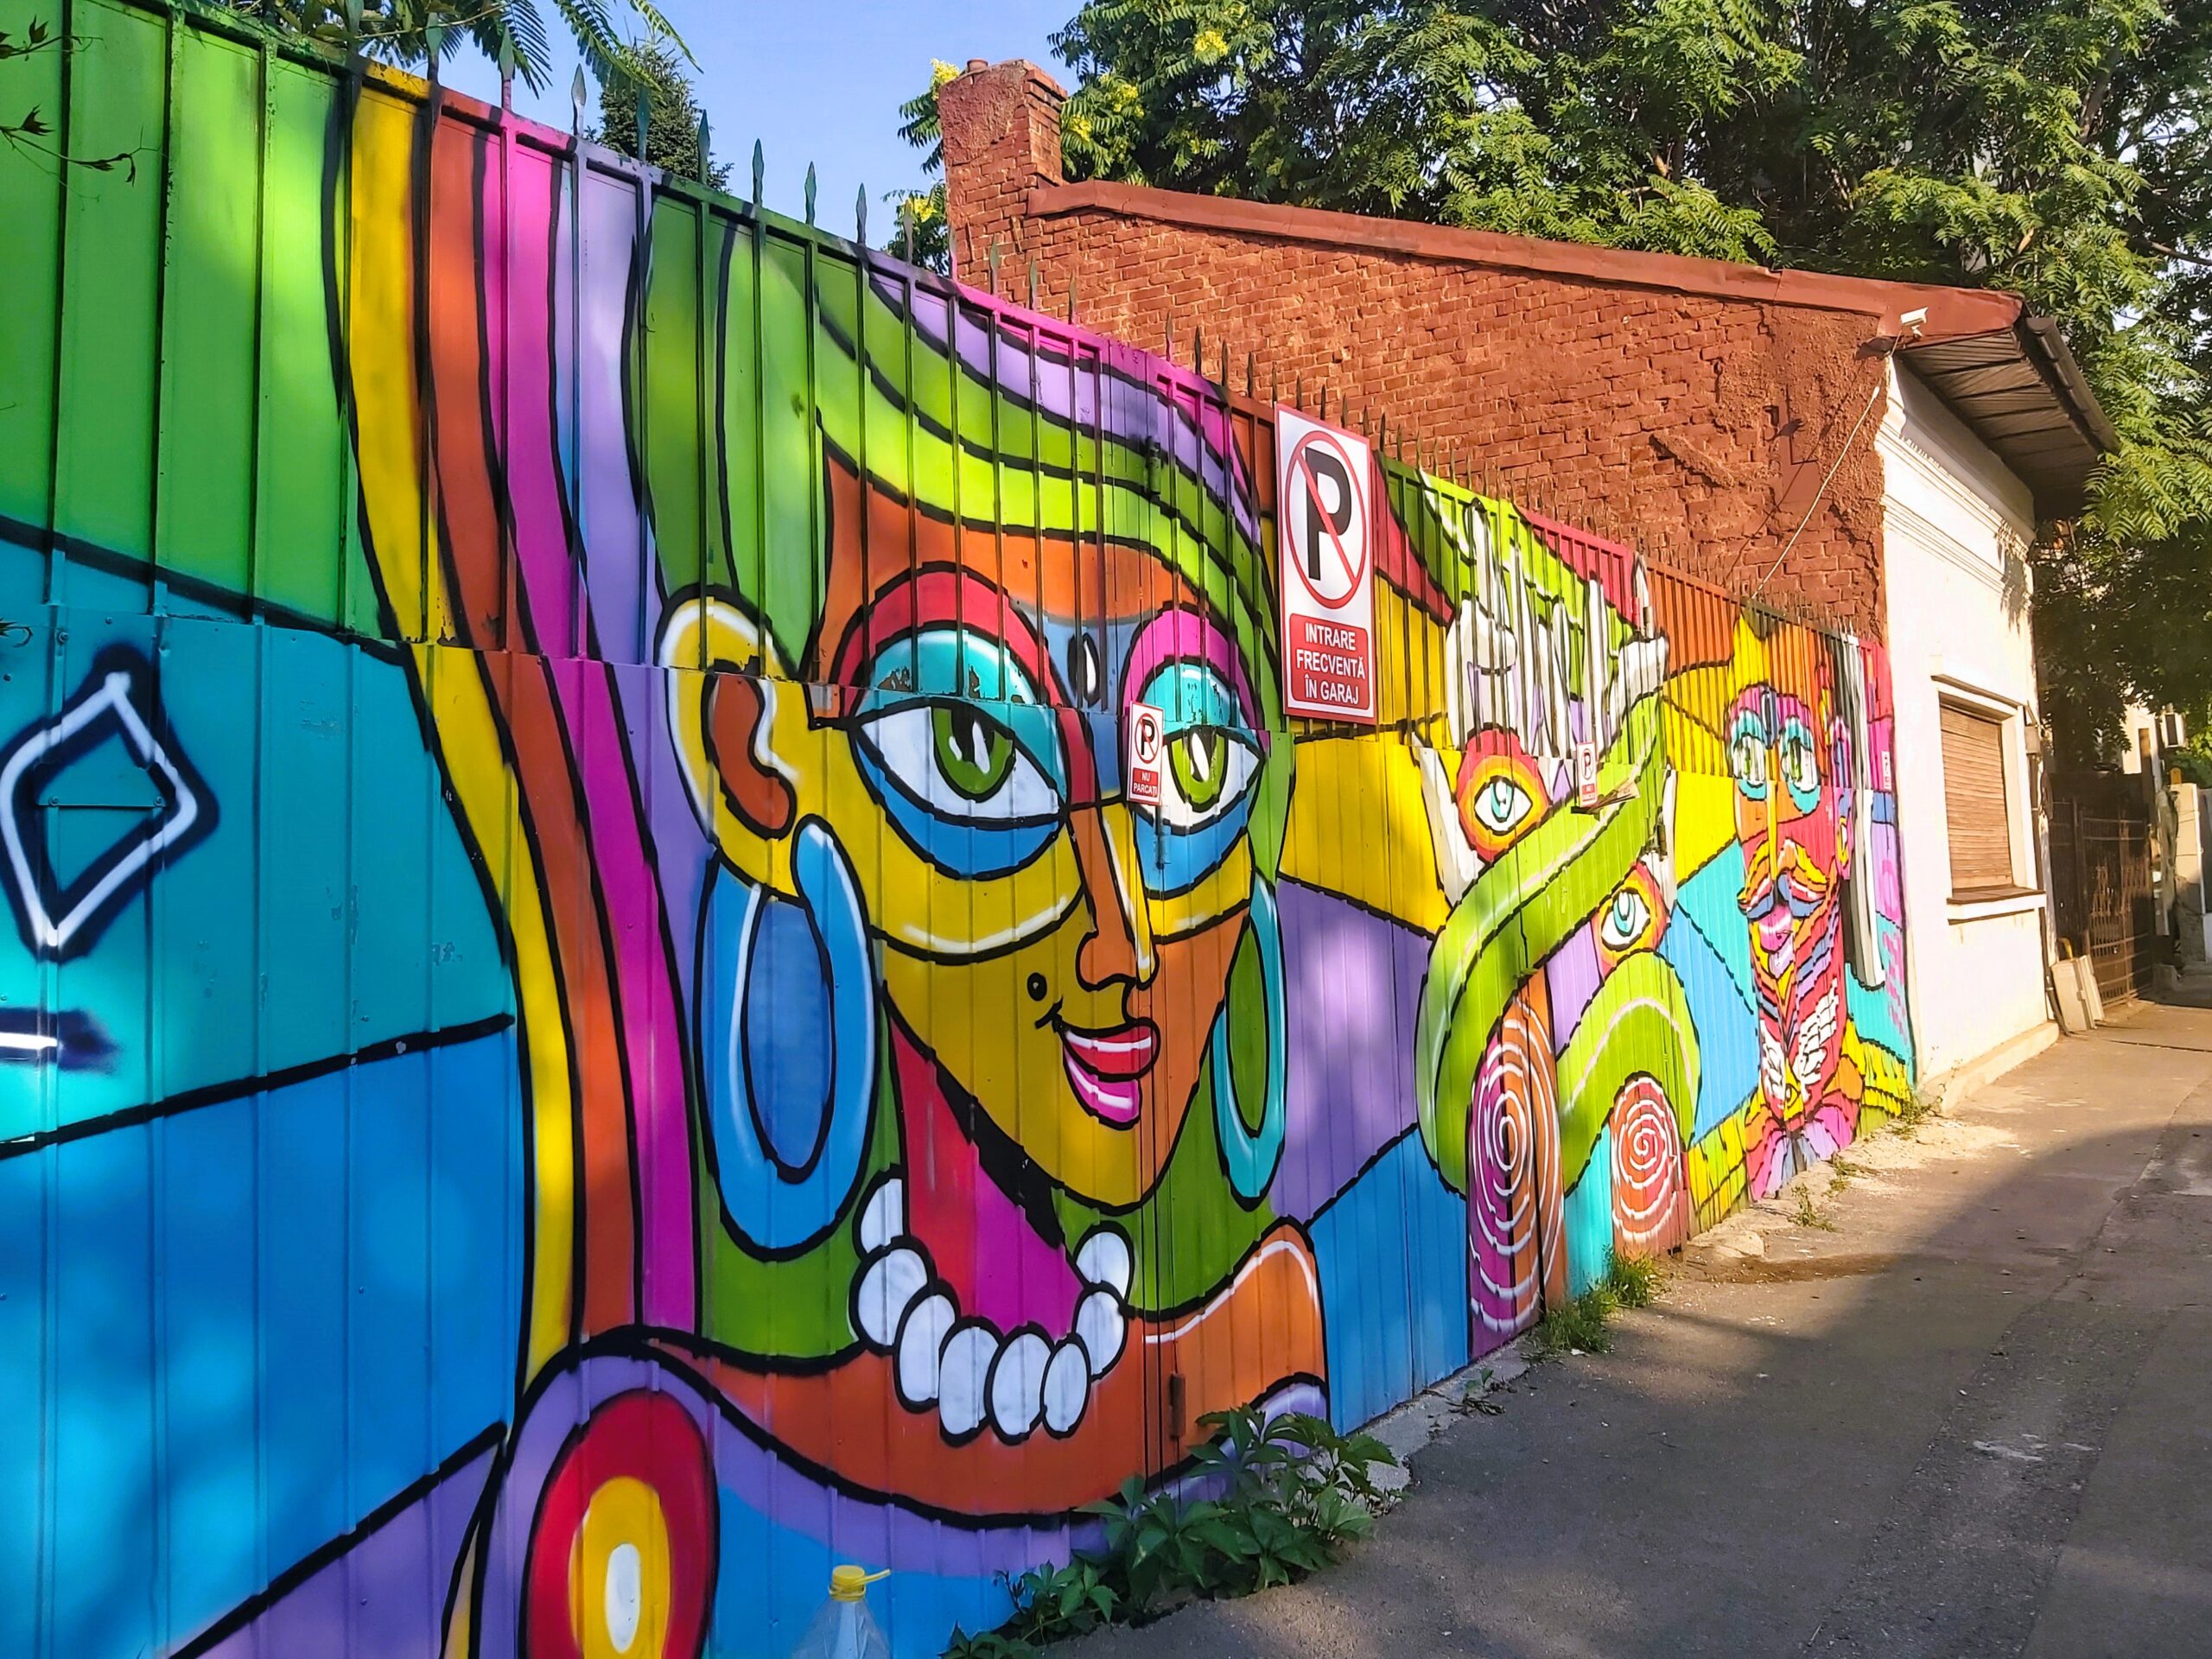 A colourful graffiti picture of a woman in București, Romania